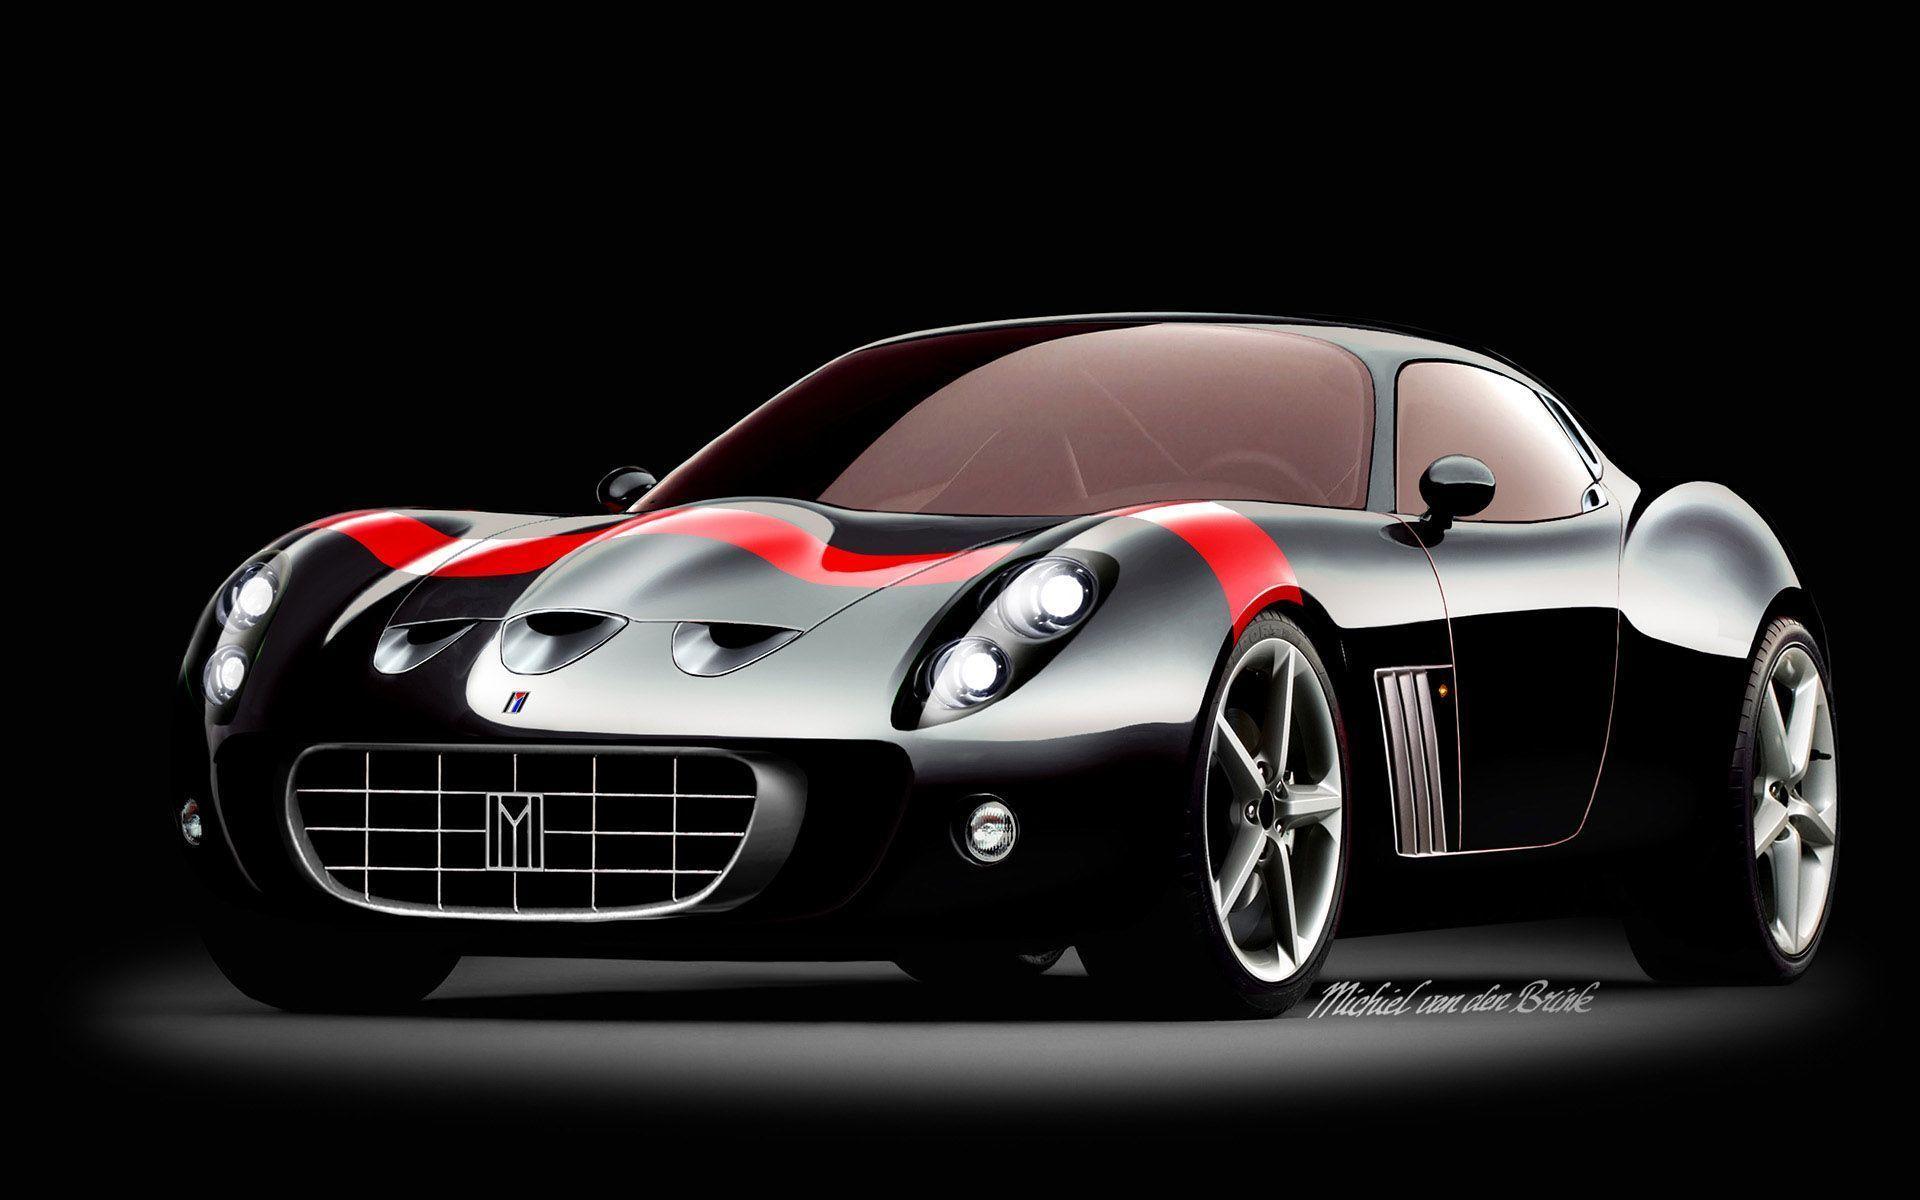 Cars: Ferrari, picture nr. 34301